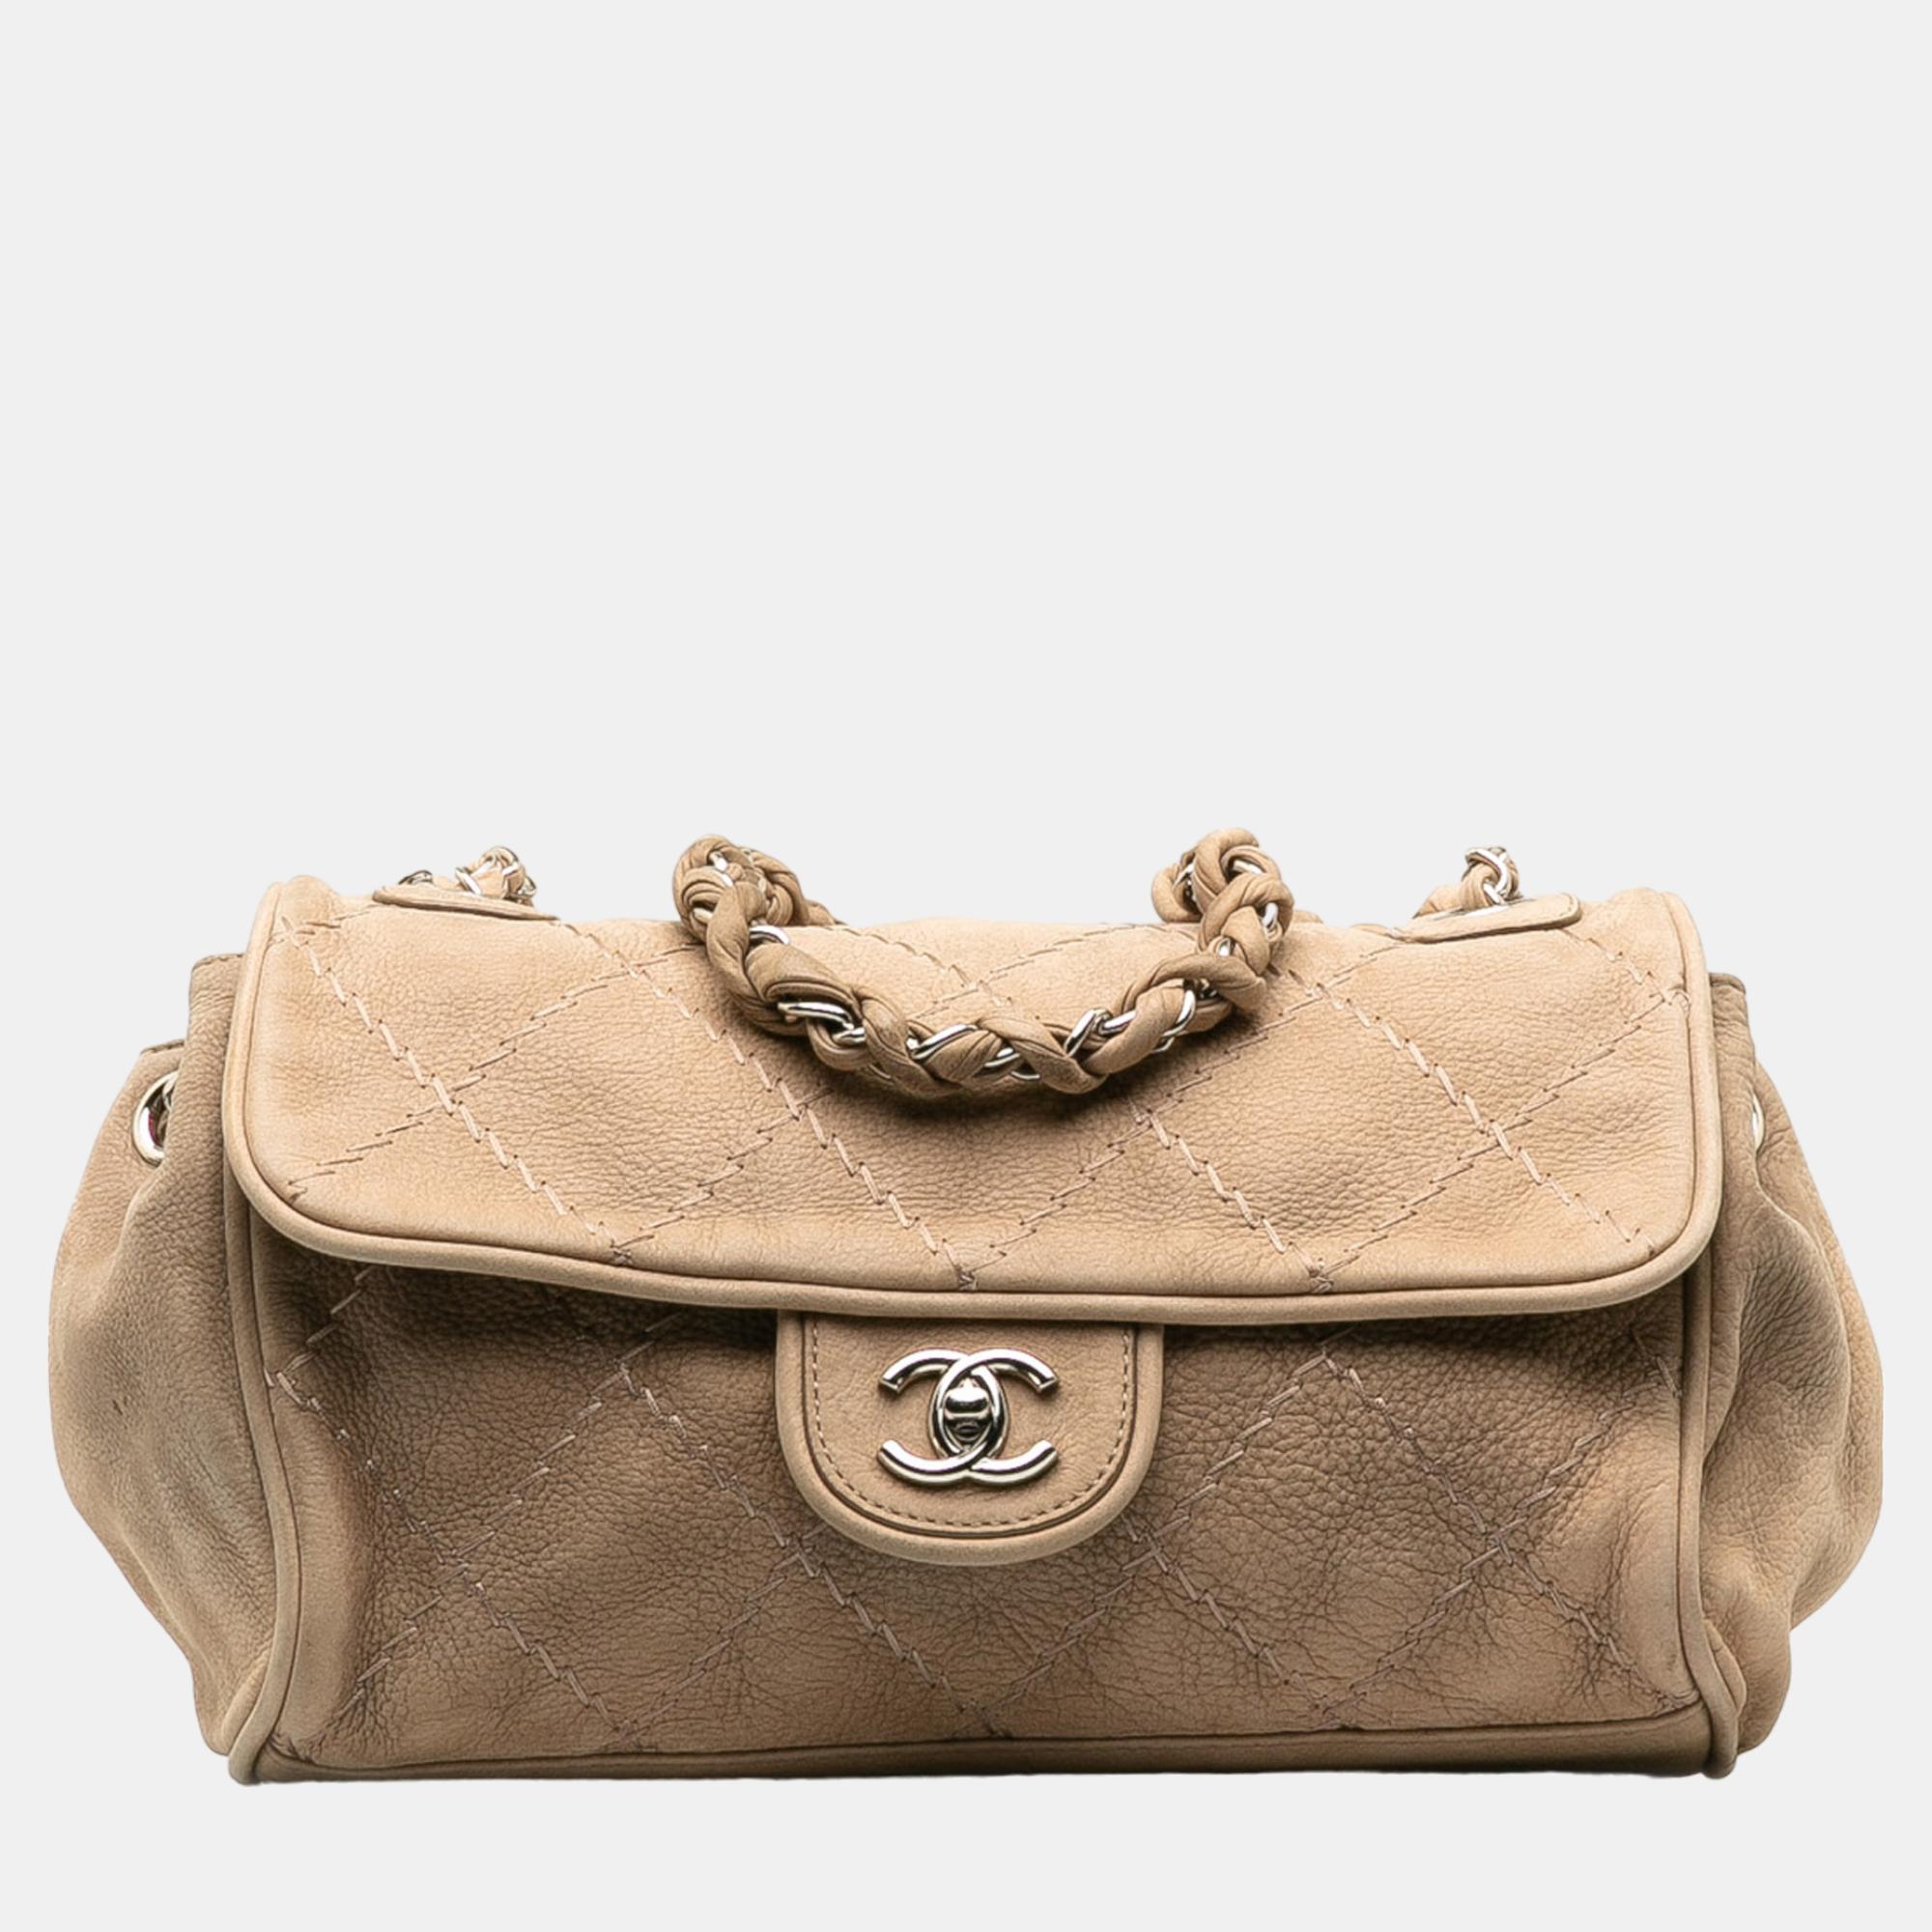 Chanel beige/brown ultimate stitch accordion shoulder bag